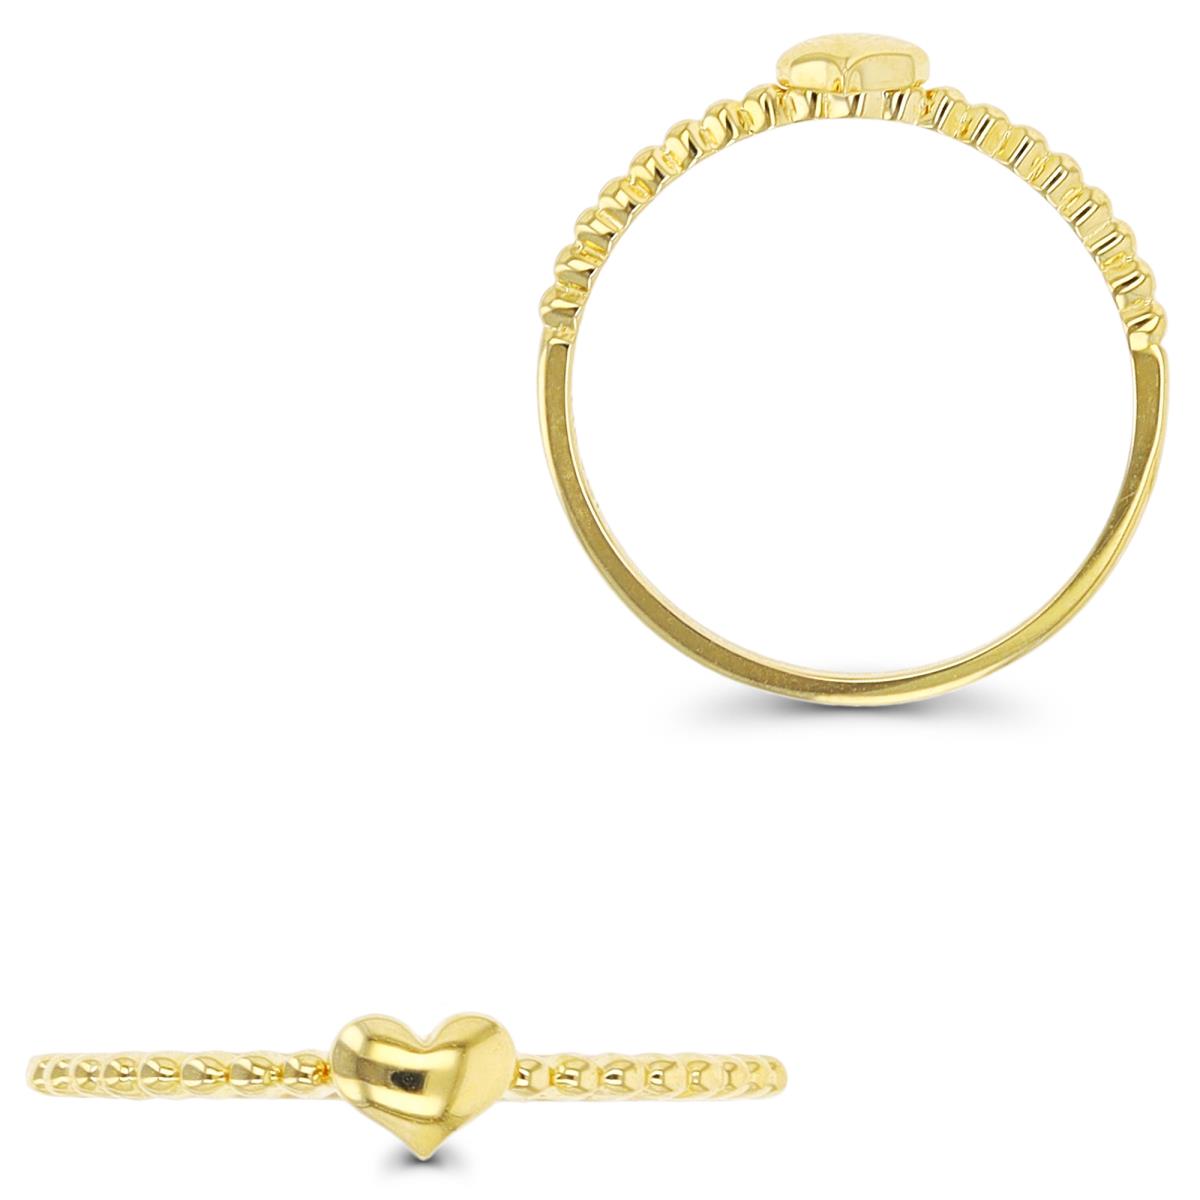 10K Yellow Gold Heart Bubble Ring